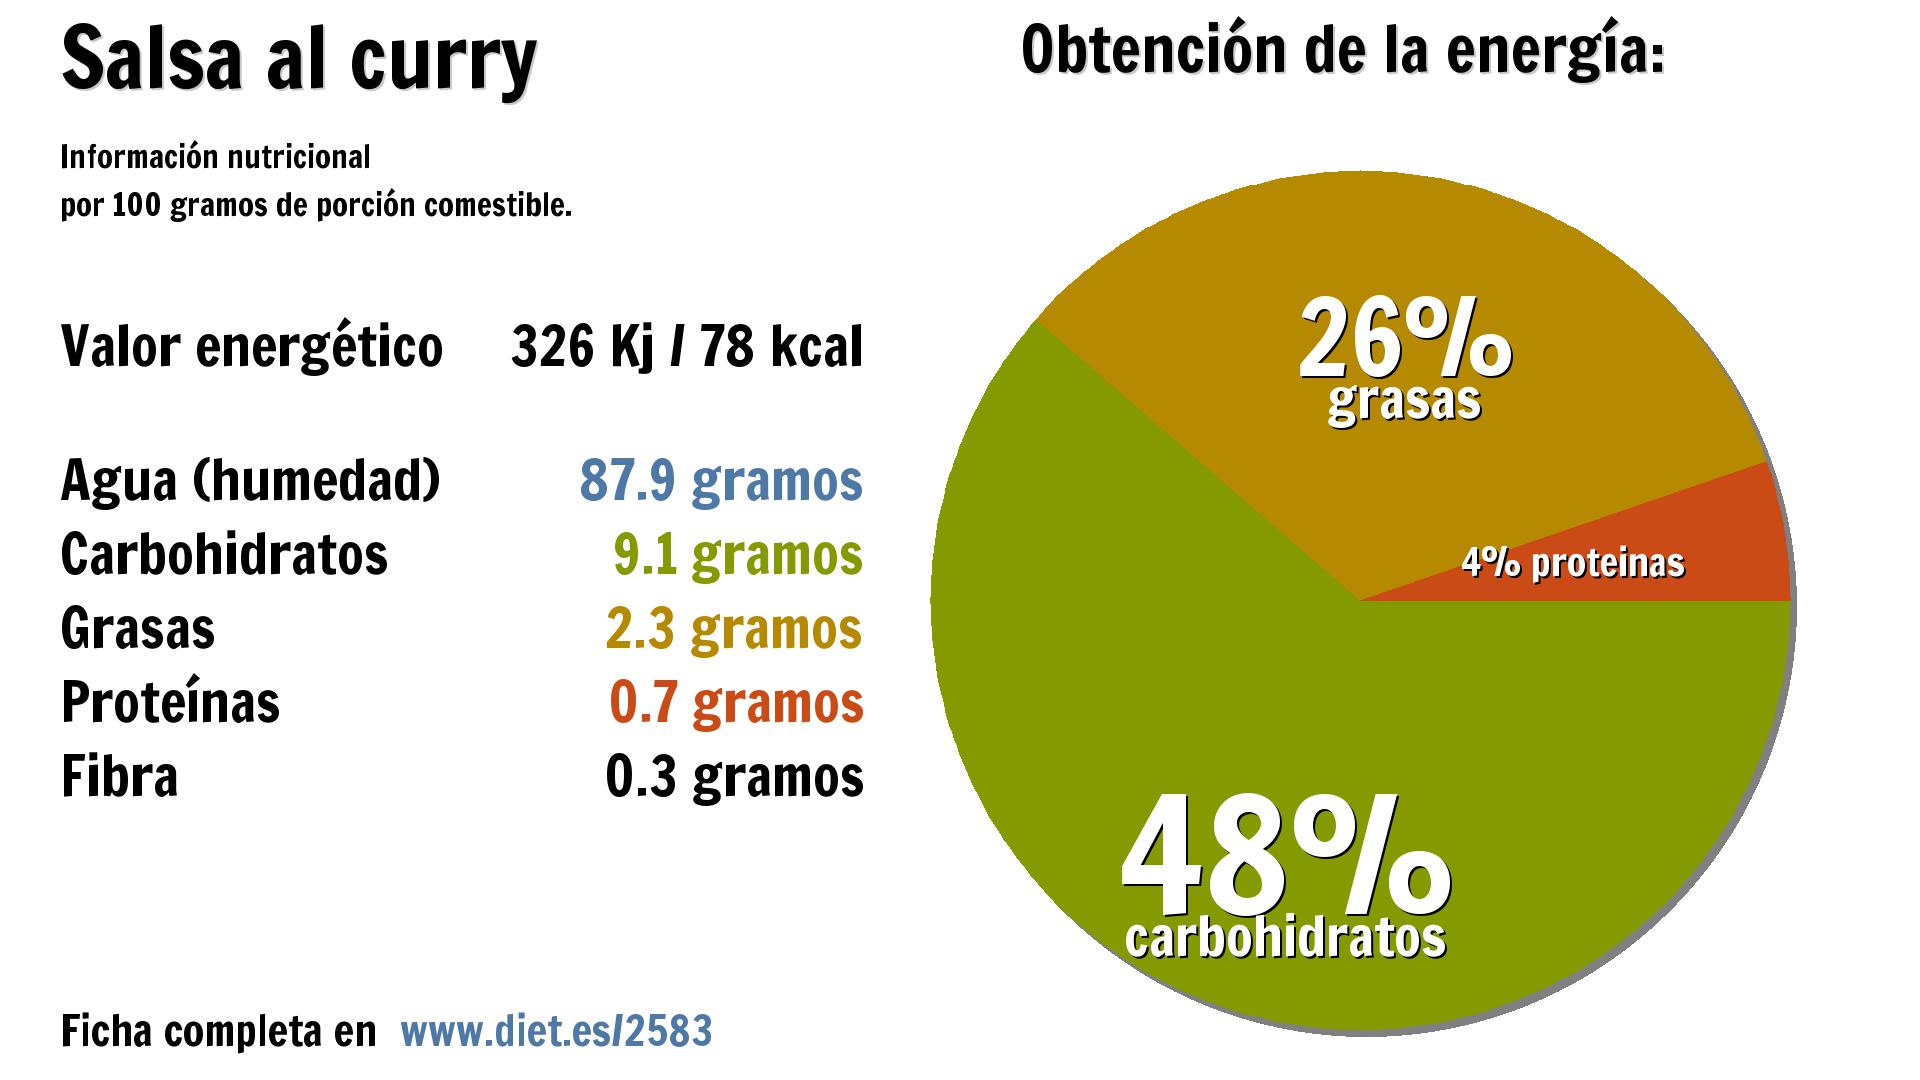 Salsa al curry: energía 326 Kj, agua 88 g., carbohidratos 9 g., grasas 2 g. y proteínas 1 g.